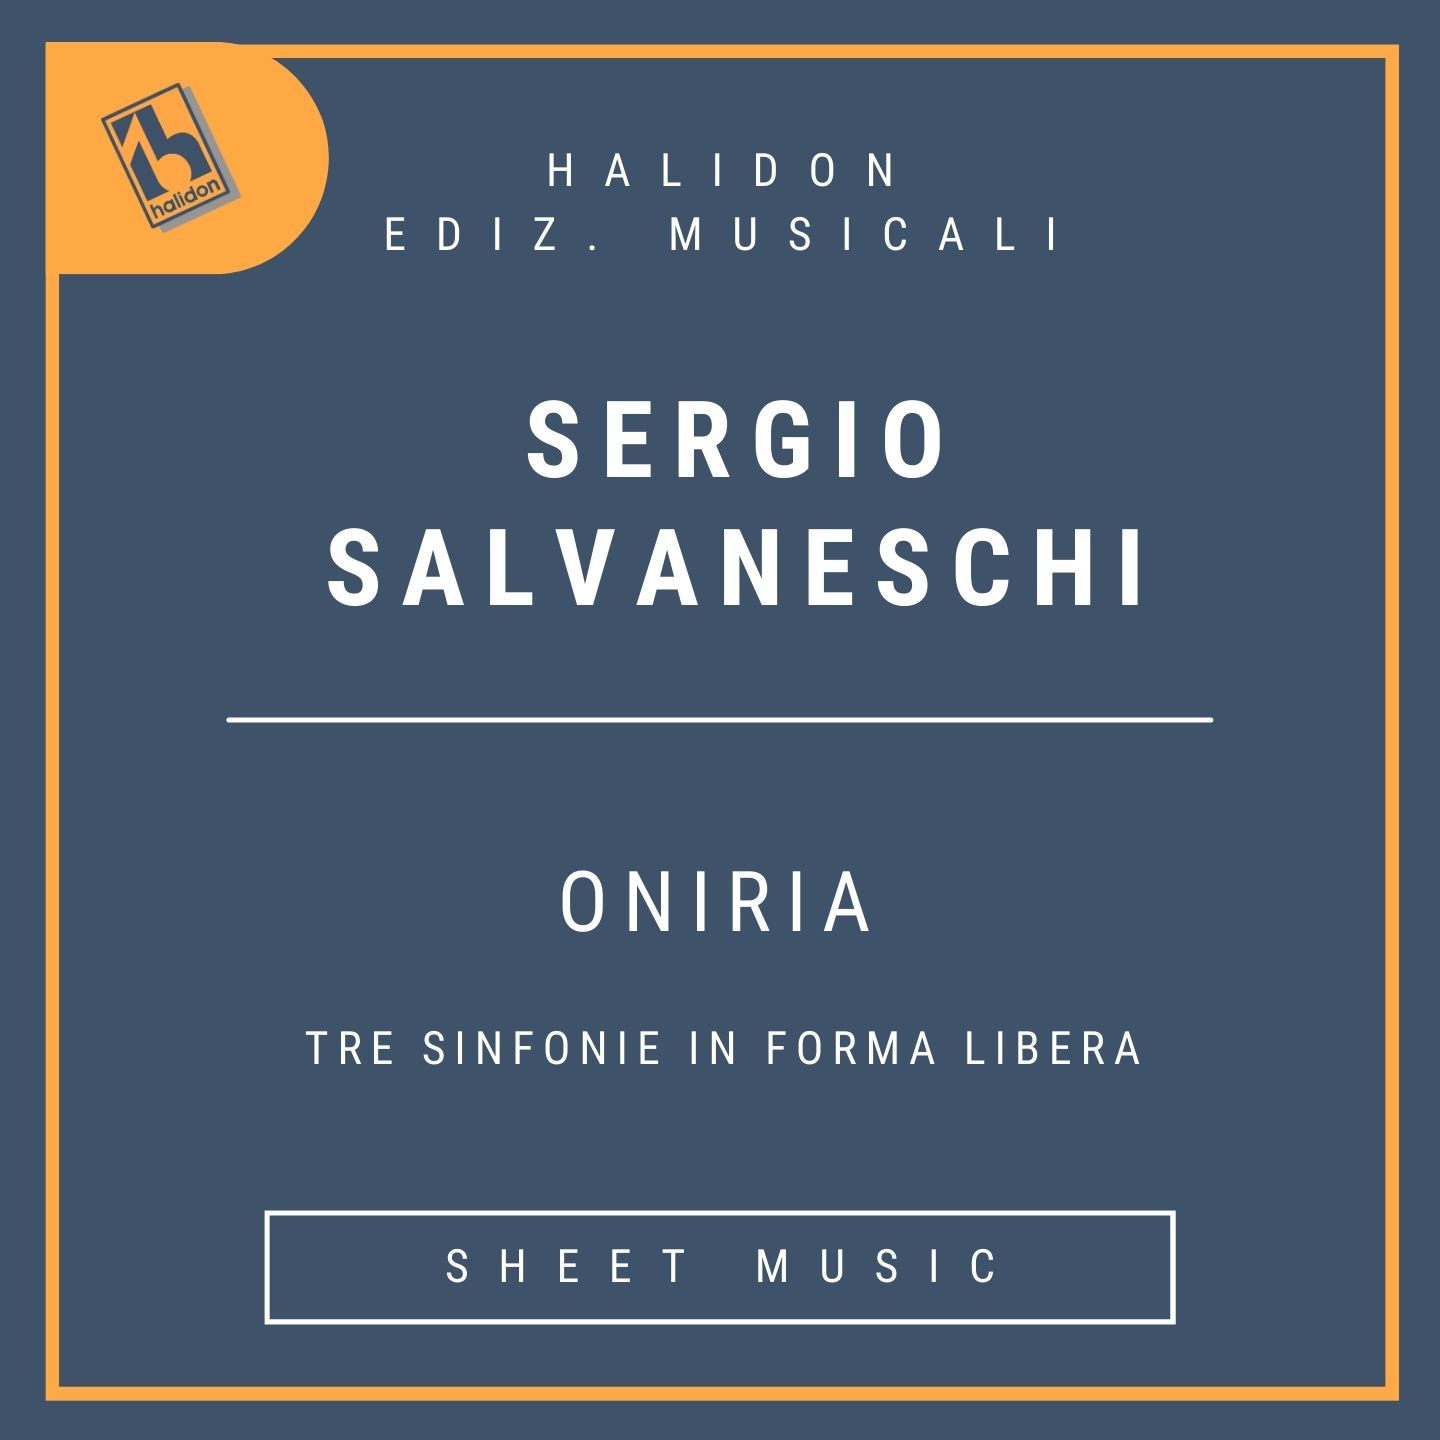 Oniria: Tre sinfonie in forma libera